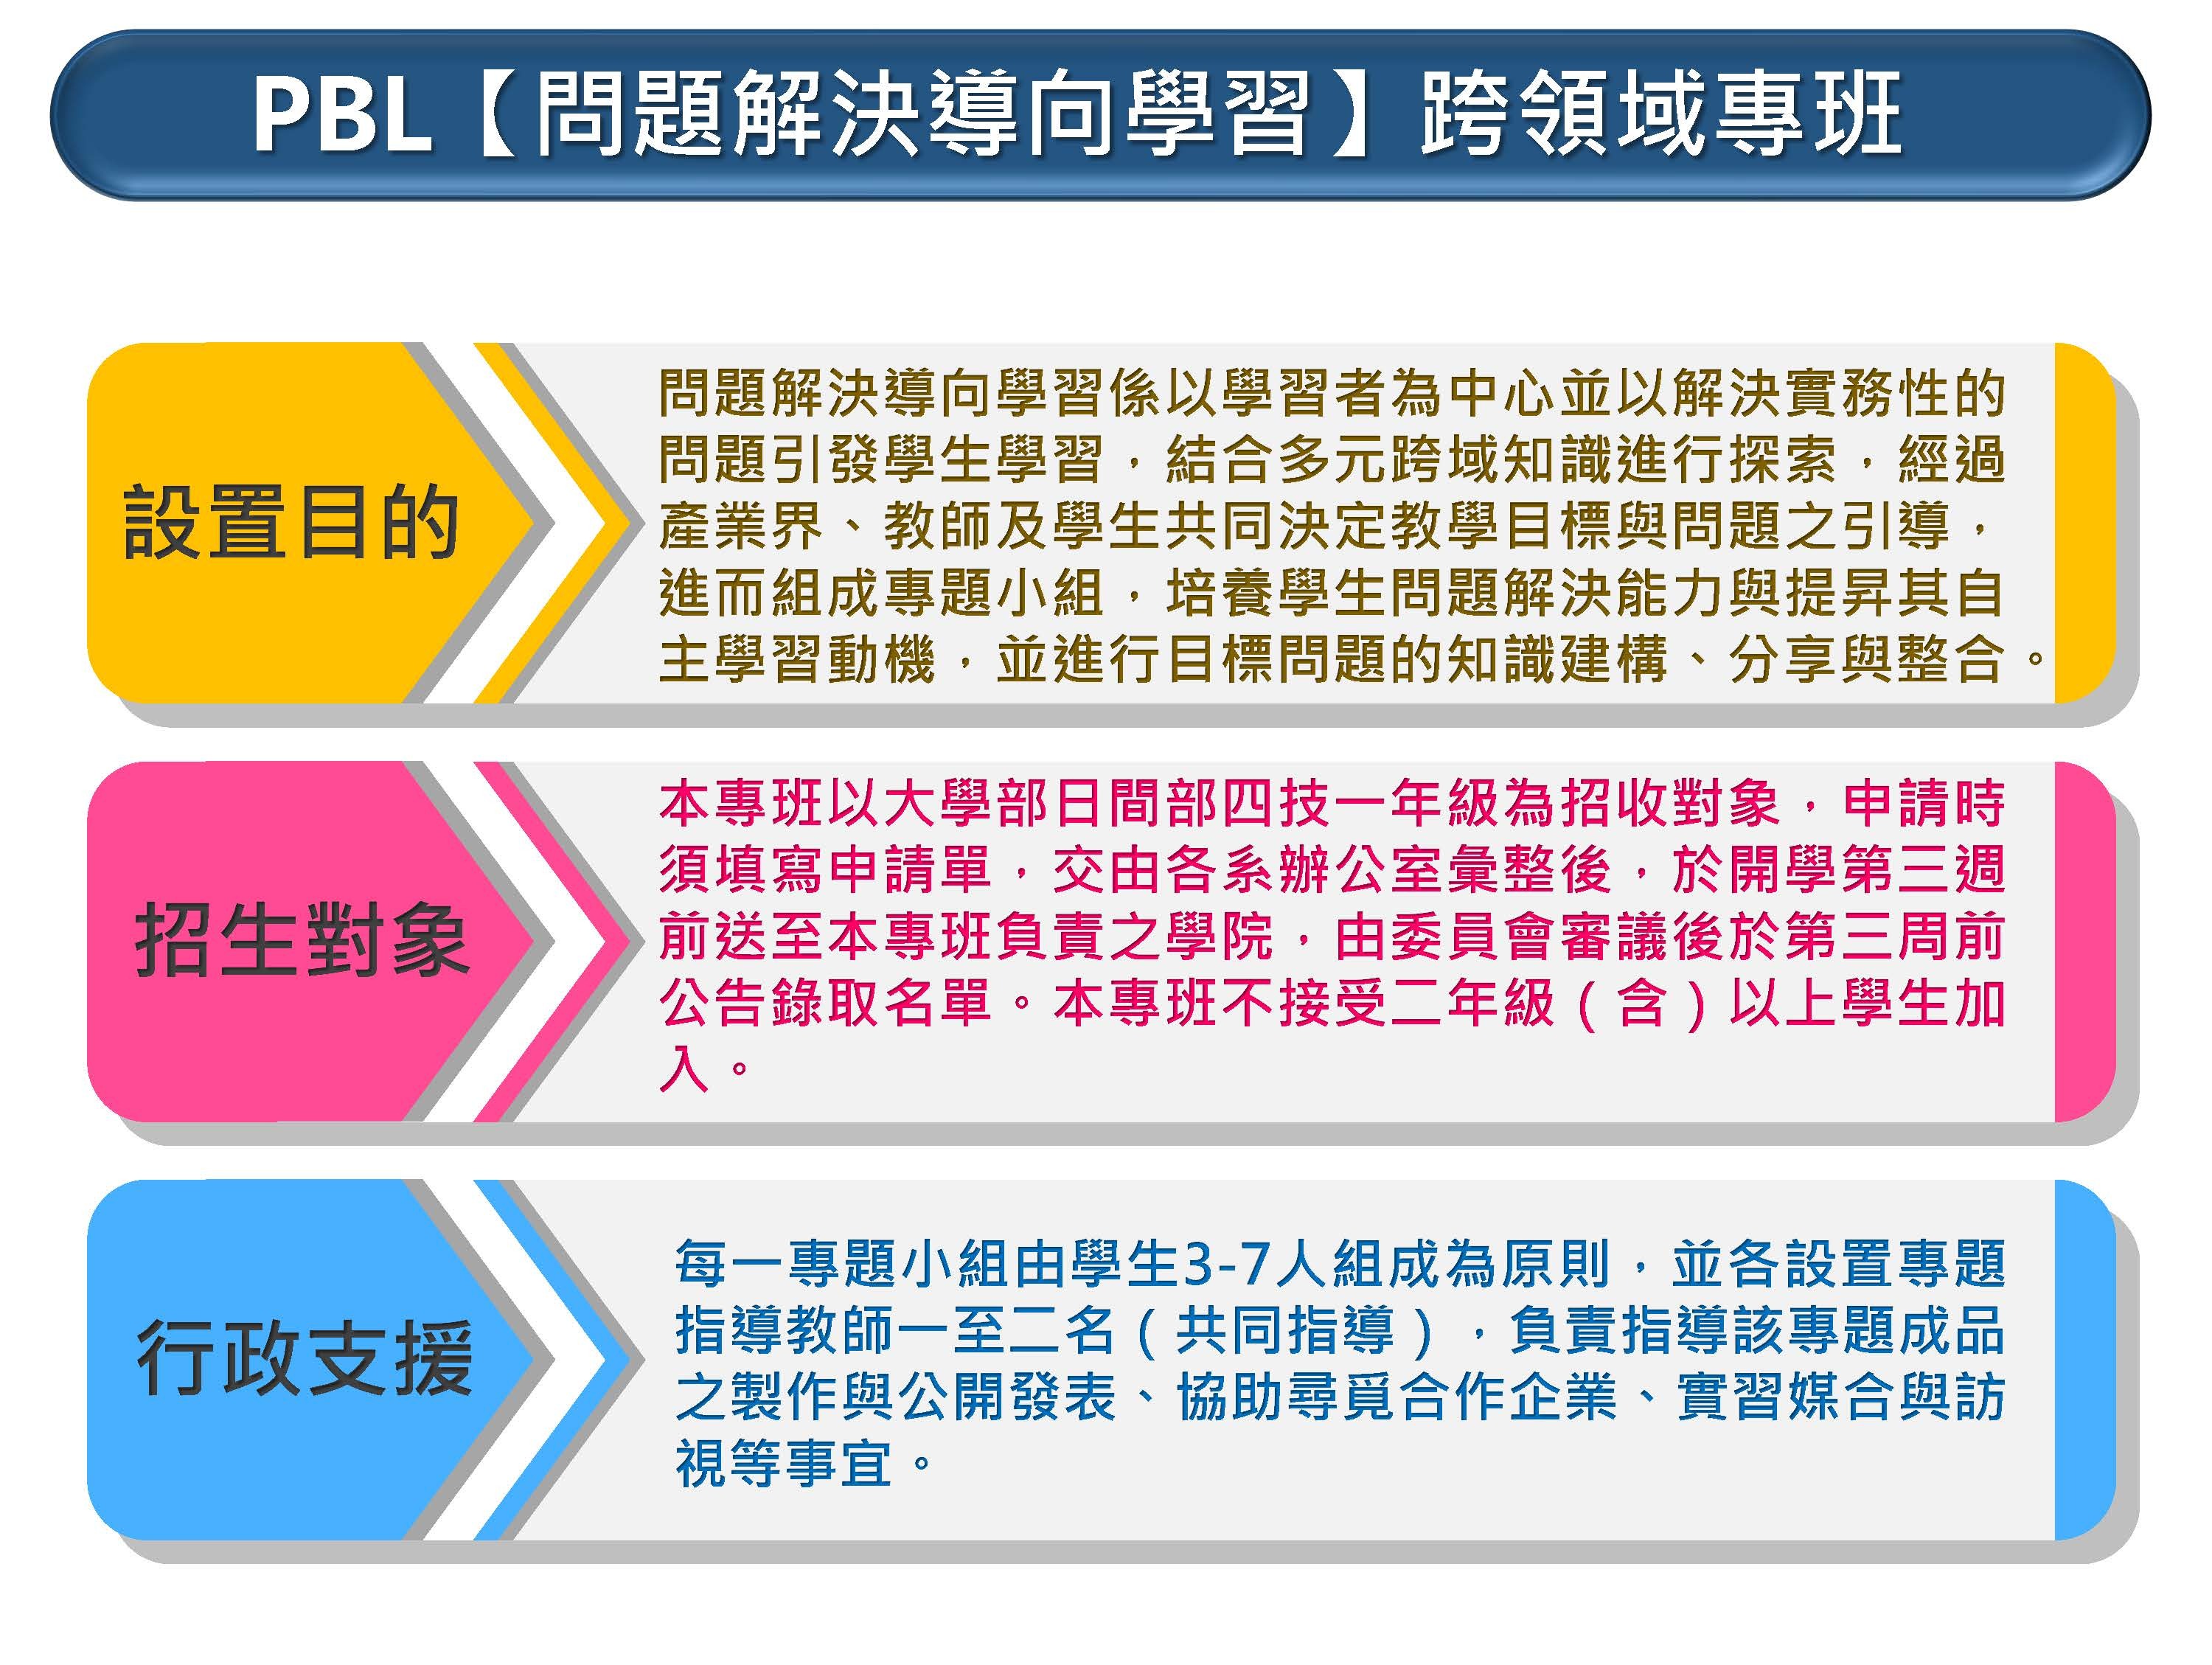 PBL(智慧機器人)跨領域專班招生對象示意圖